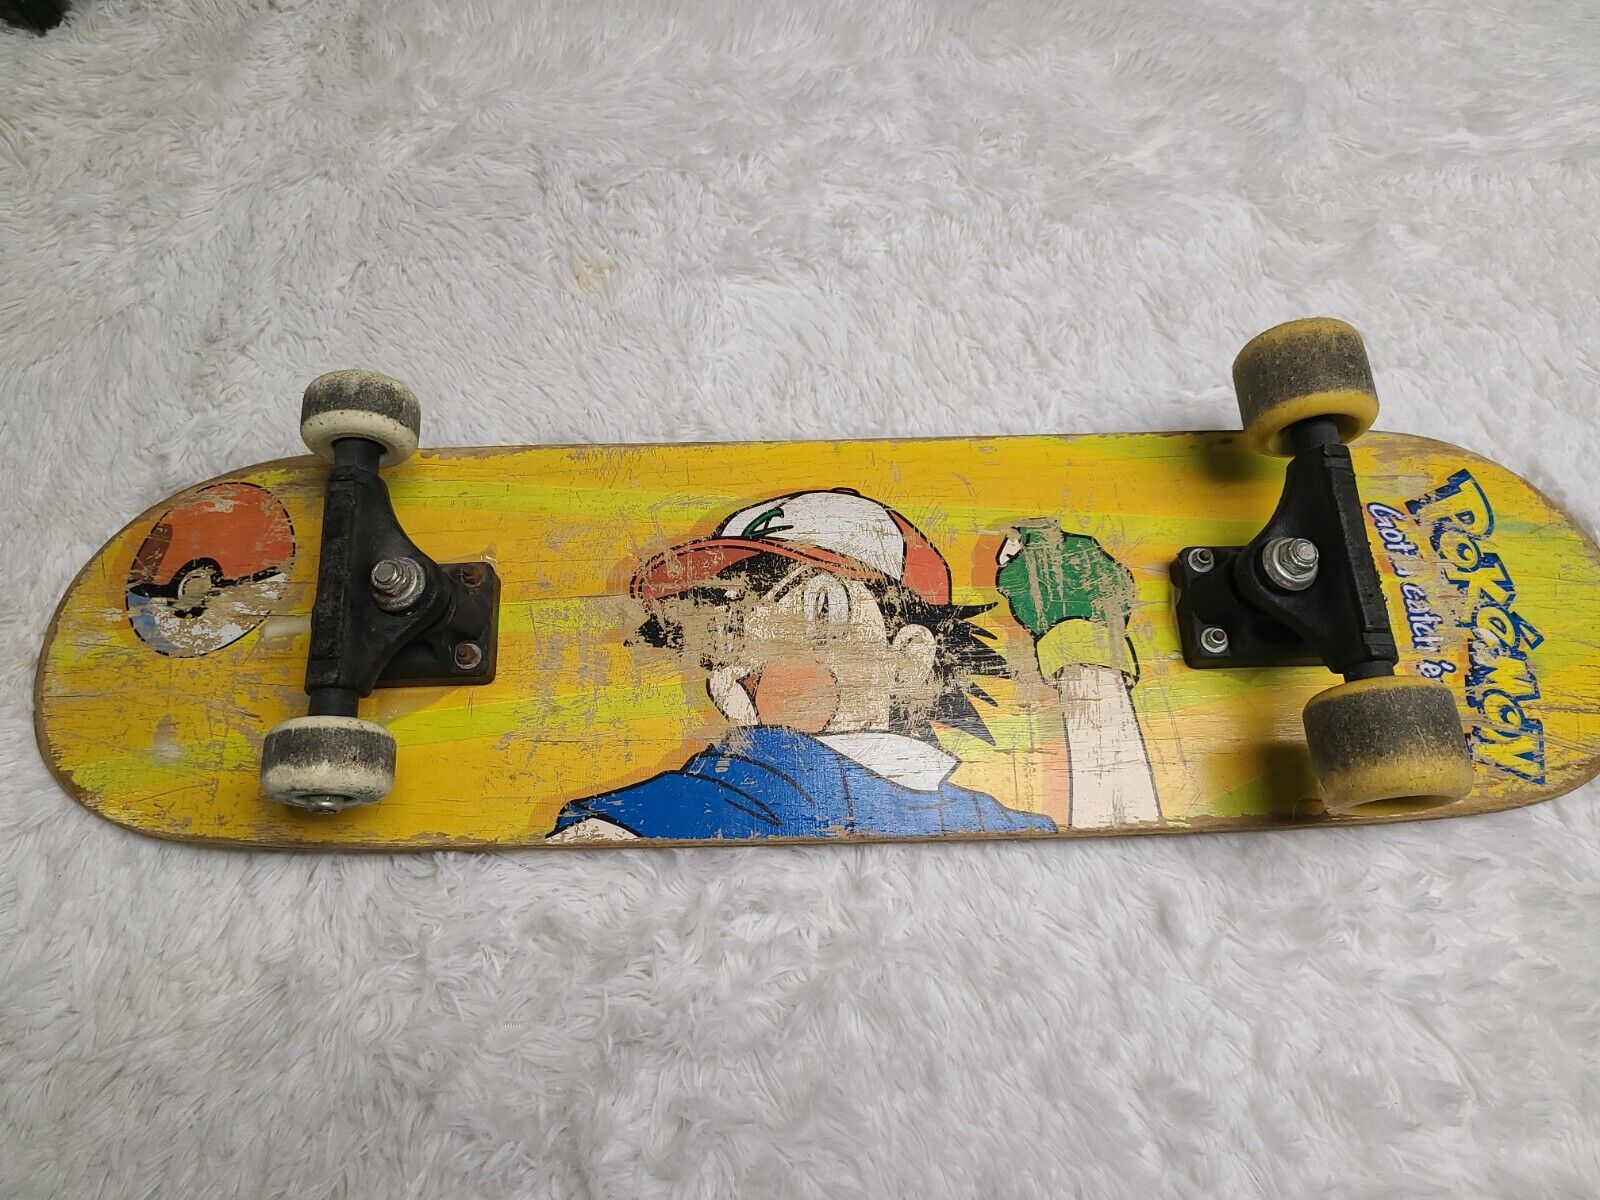 Vintage Pokémon Ash Ketchum Skateboard 1998 Wall Hanger Art Pokemon Nintendo